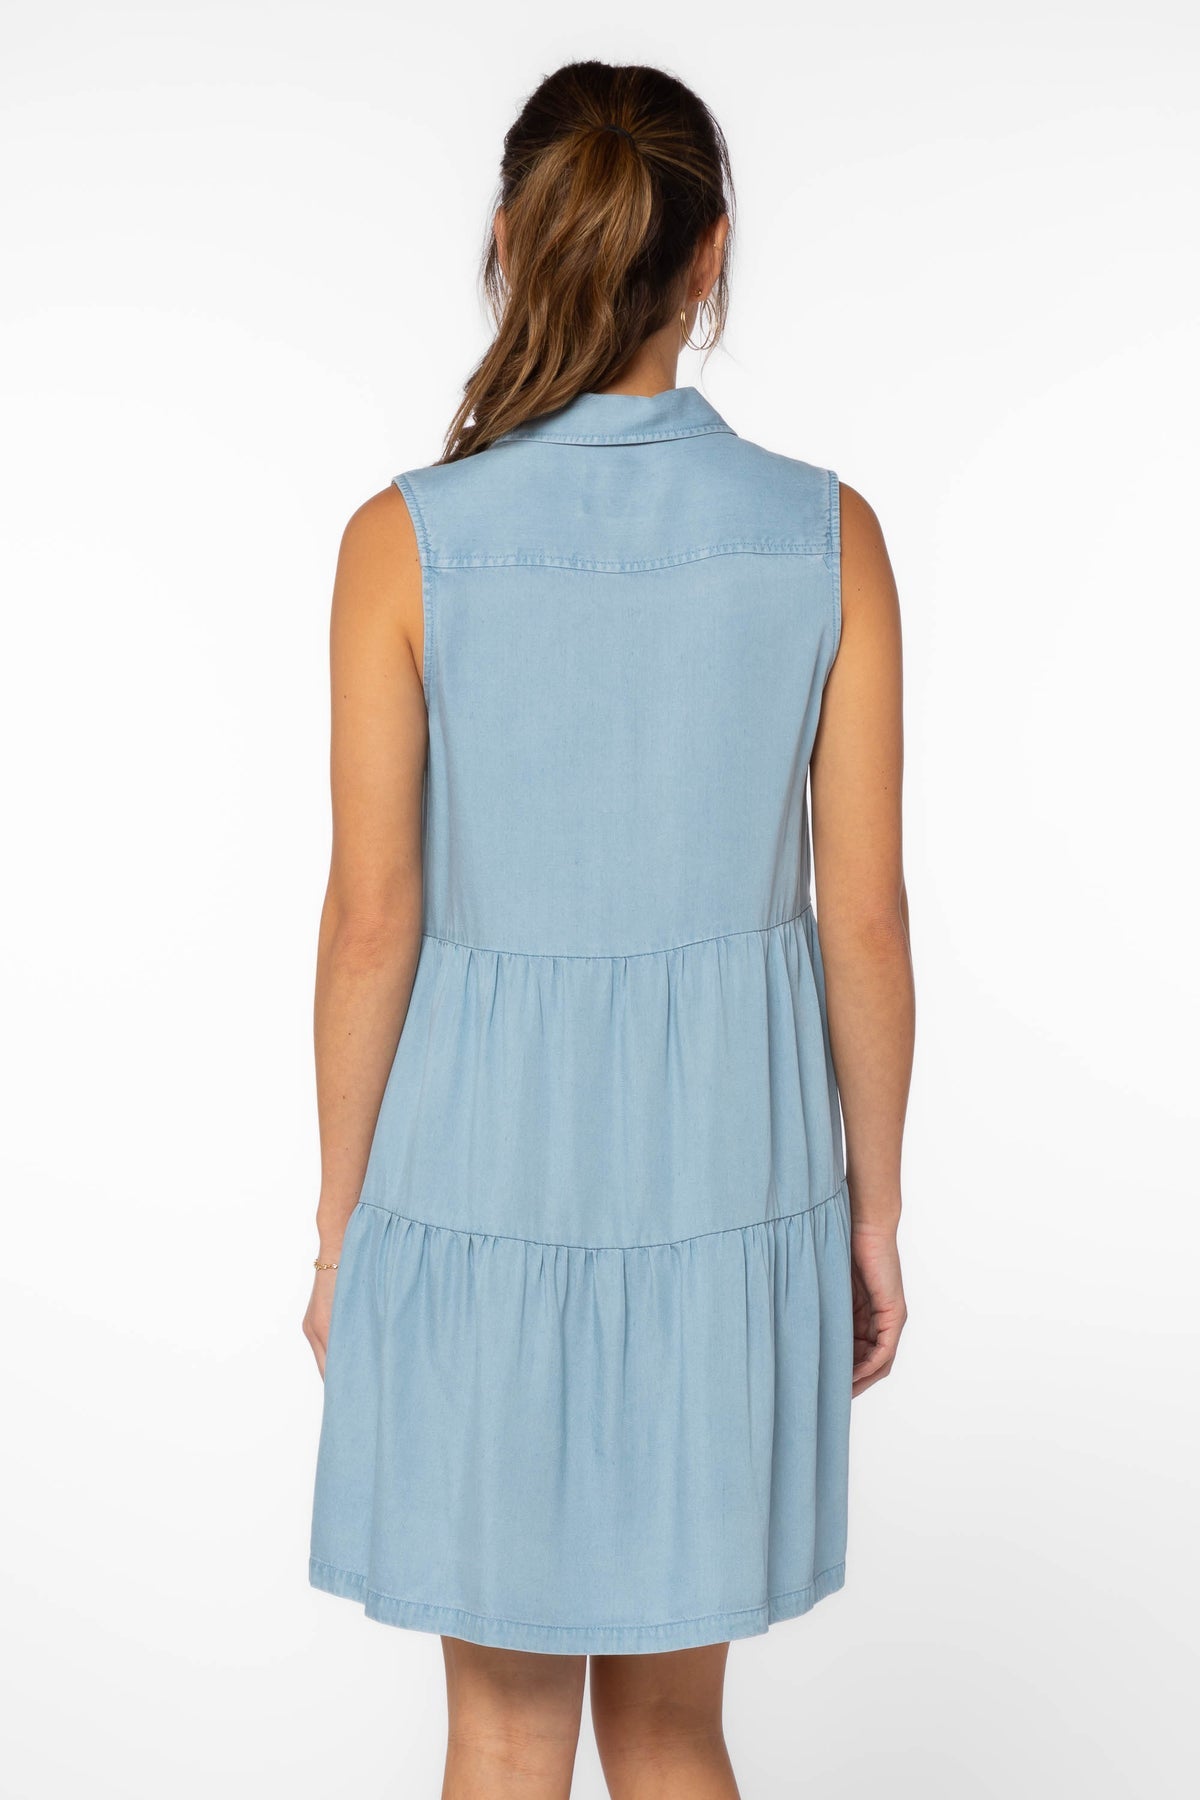 Collette Blue Denim Dress